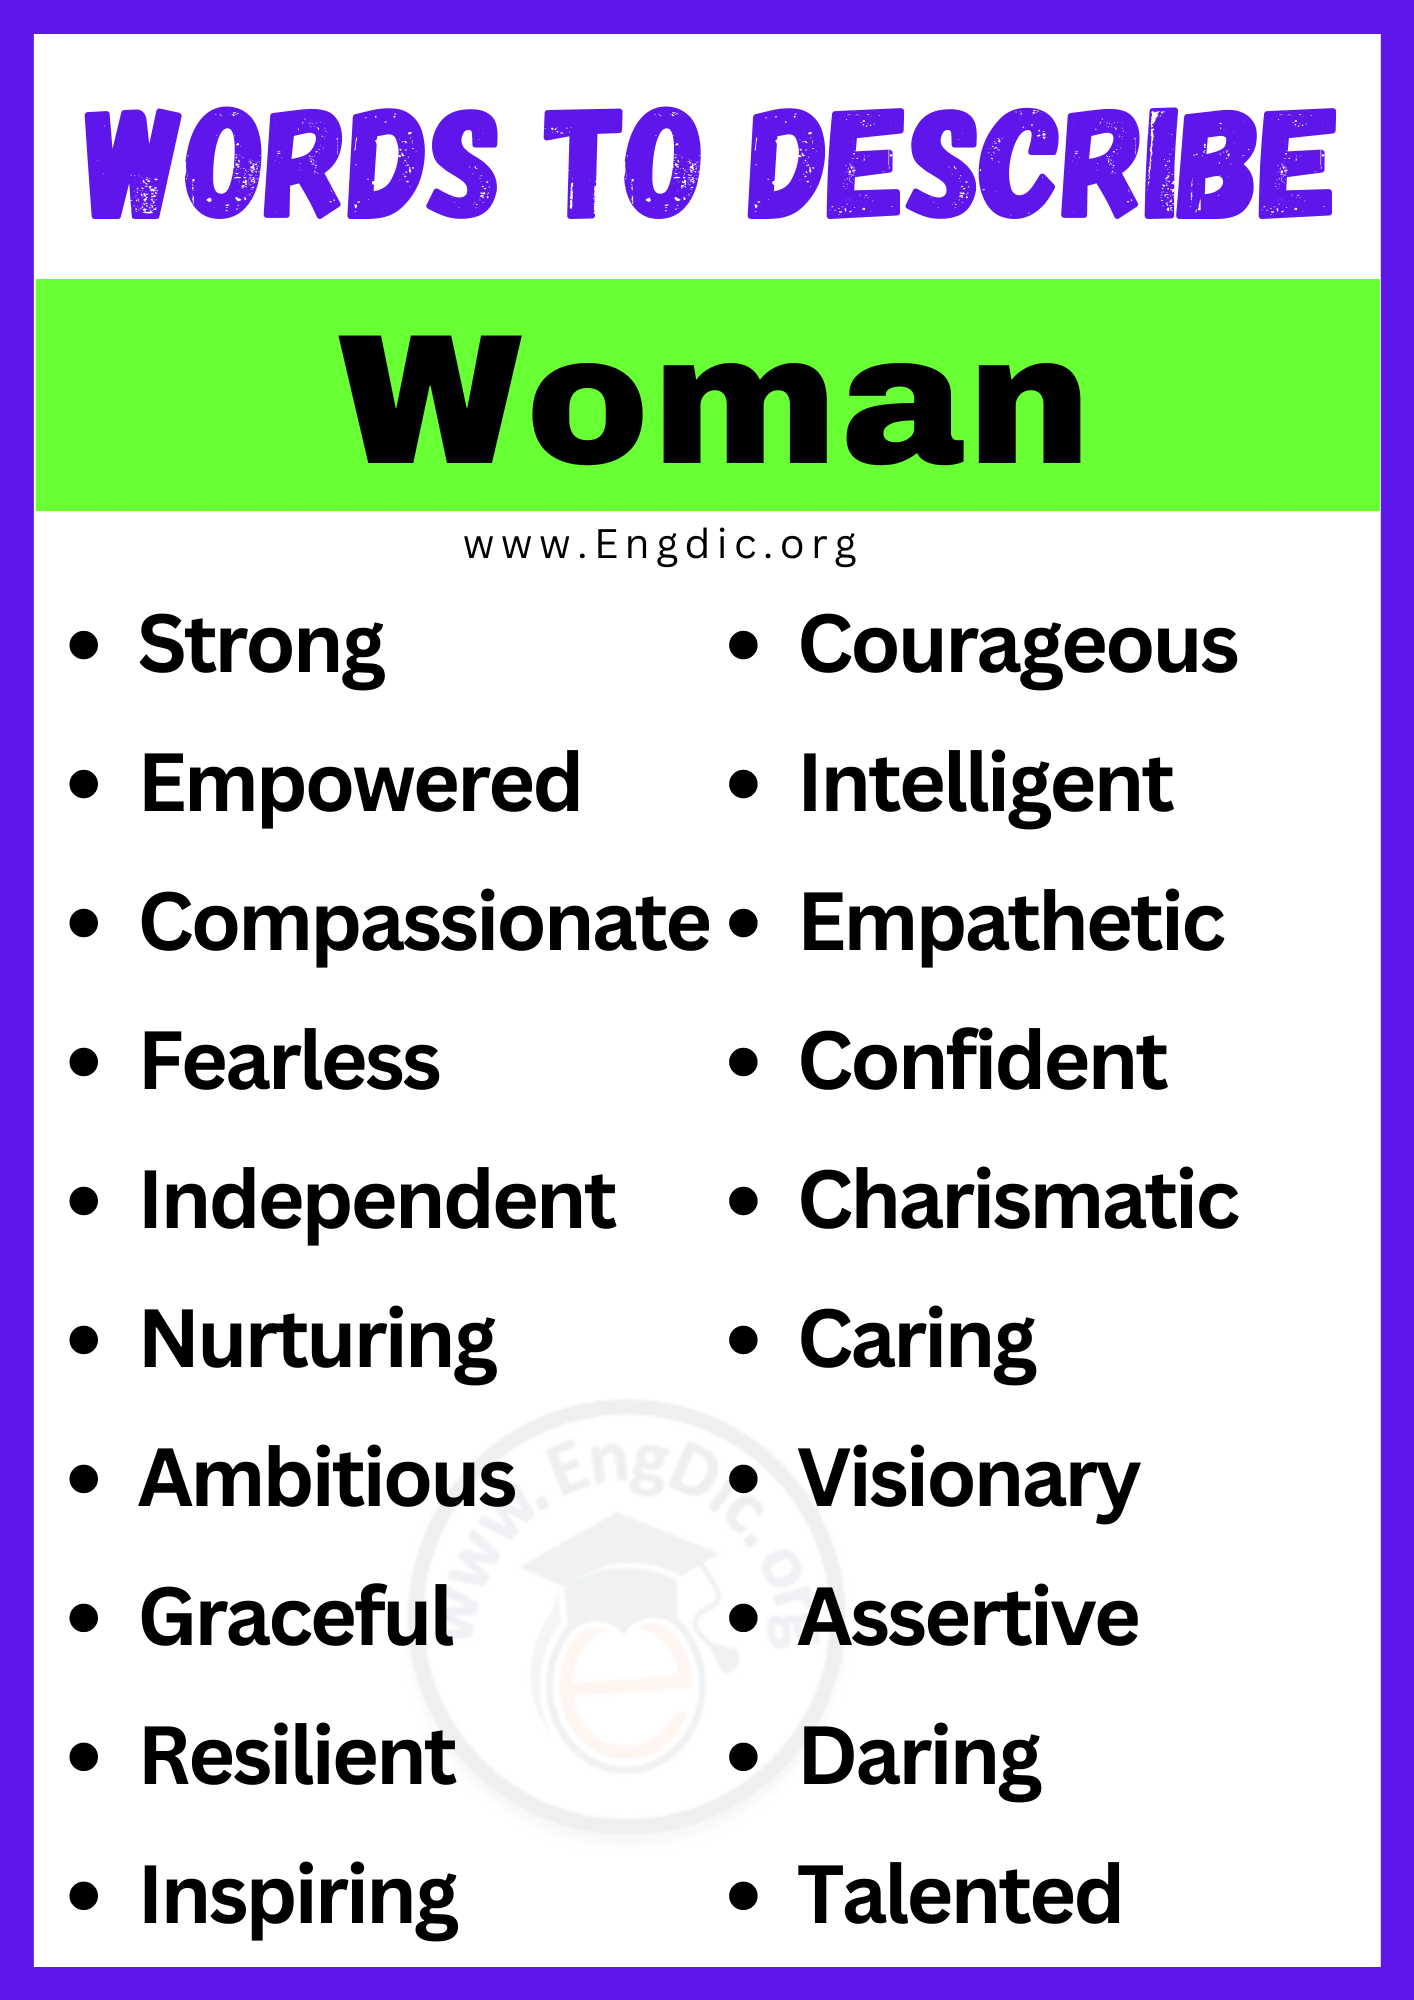 Words to Describe Woman